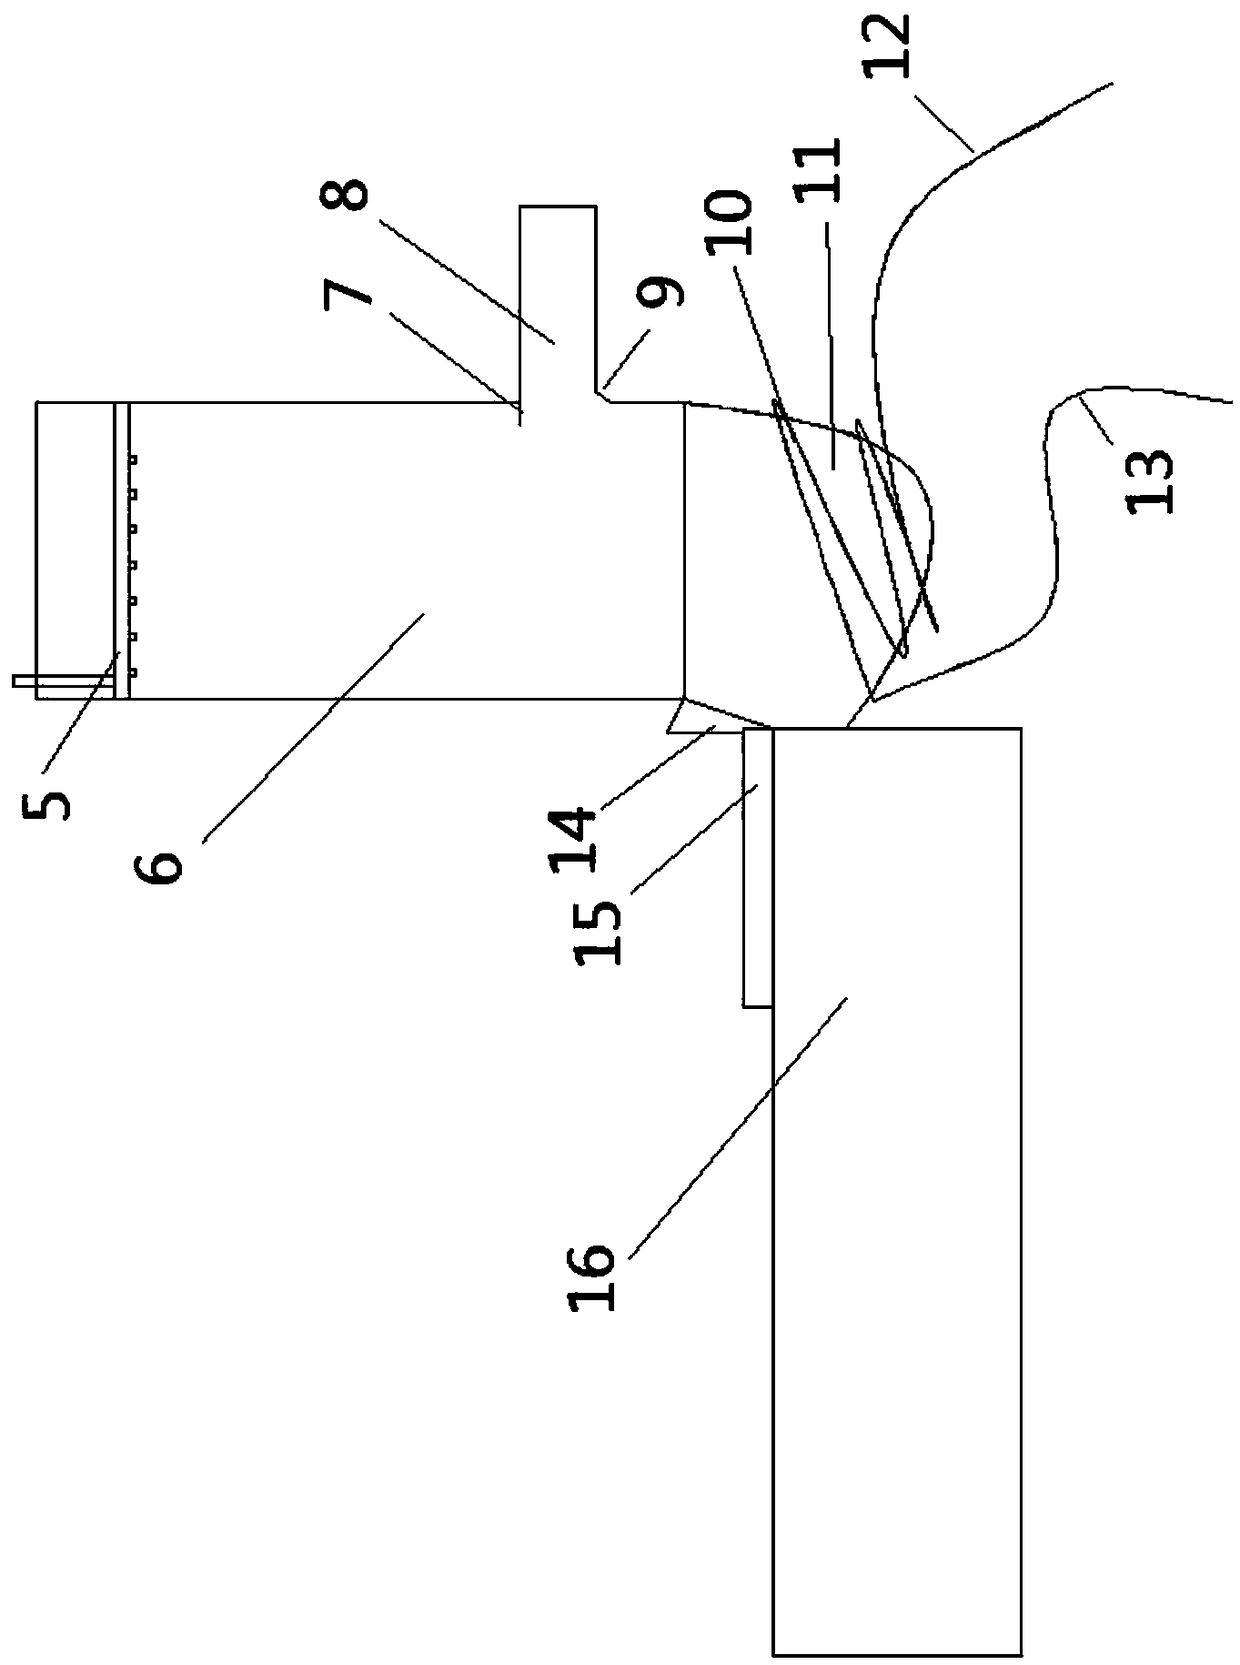 Model selection method of steel work converter matched steam heat accumulators